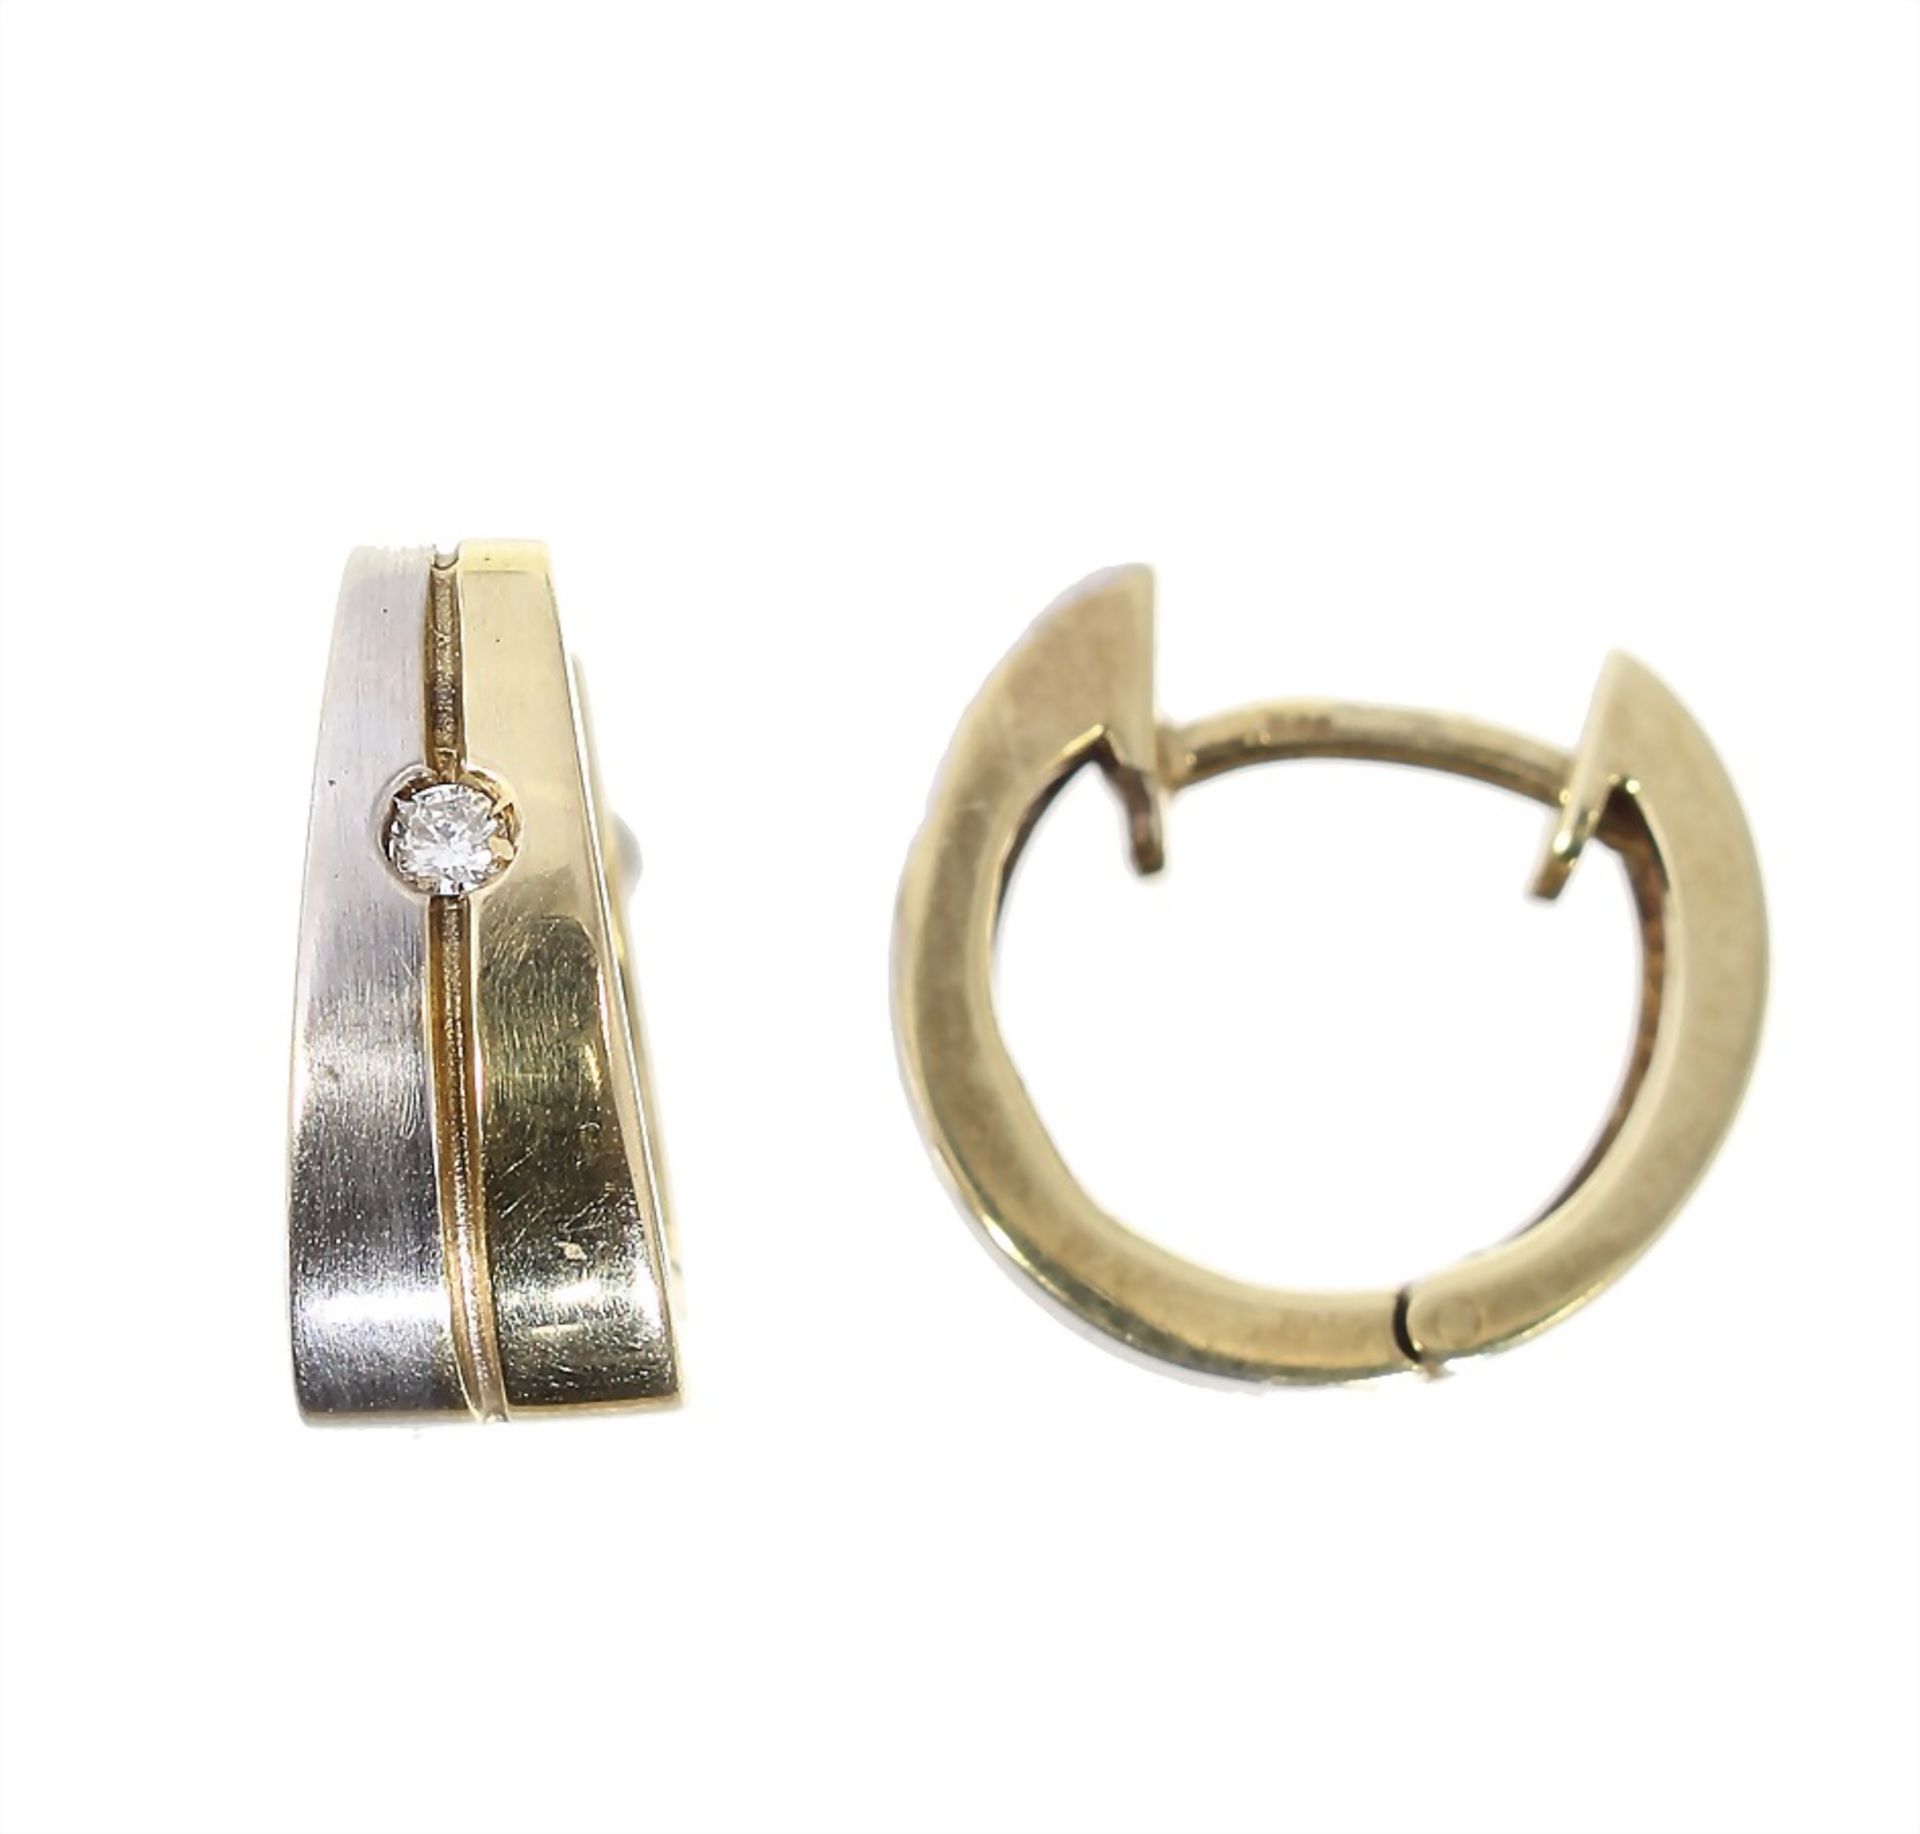 a pair of hoop earrings, yelow gold/white gold 585/000, 2 brilliants c. 0.04 ct white, diameter =